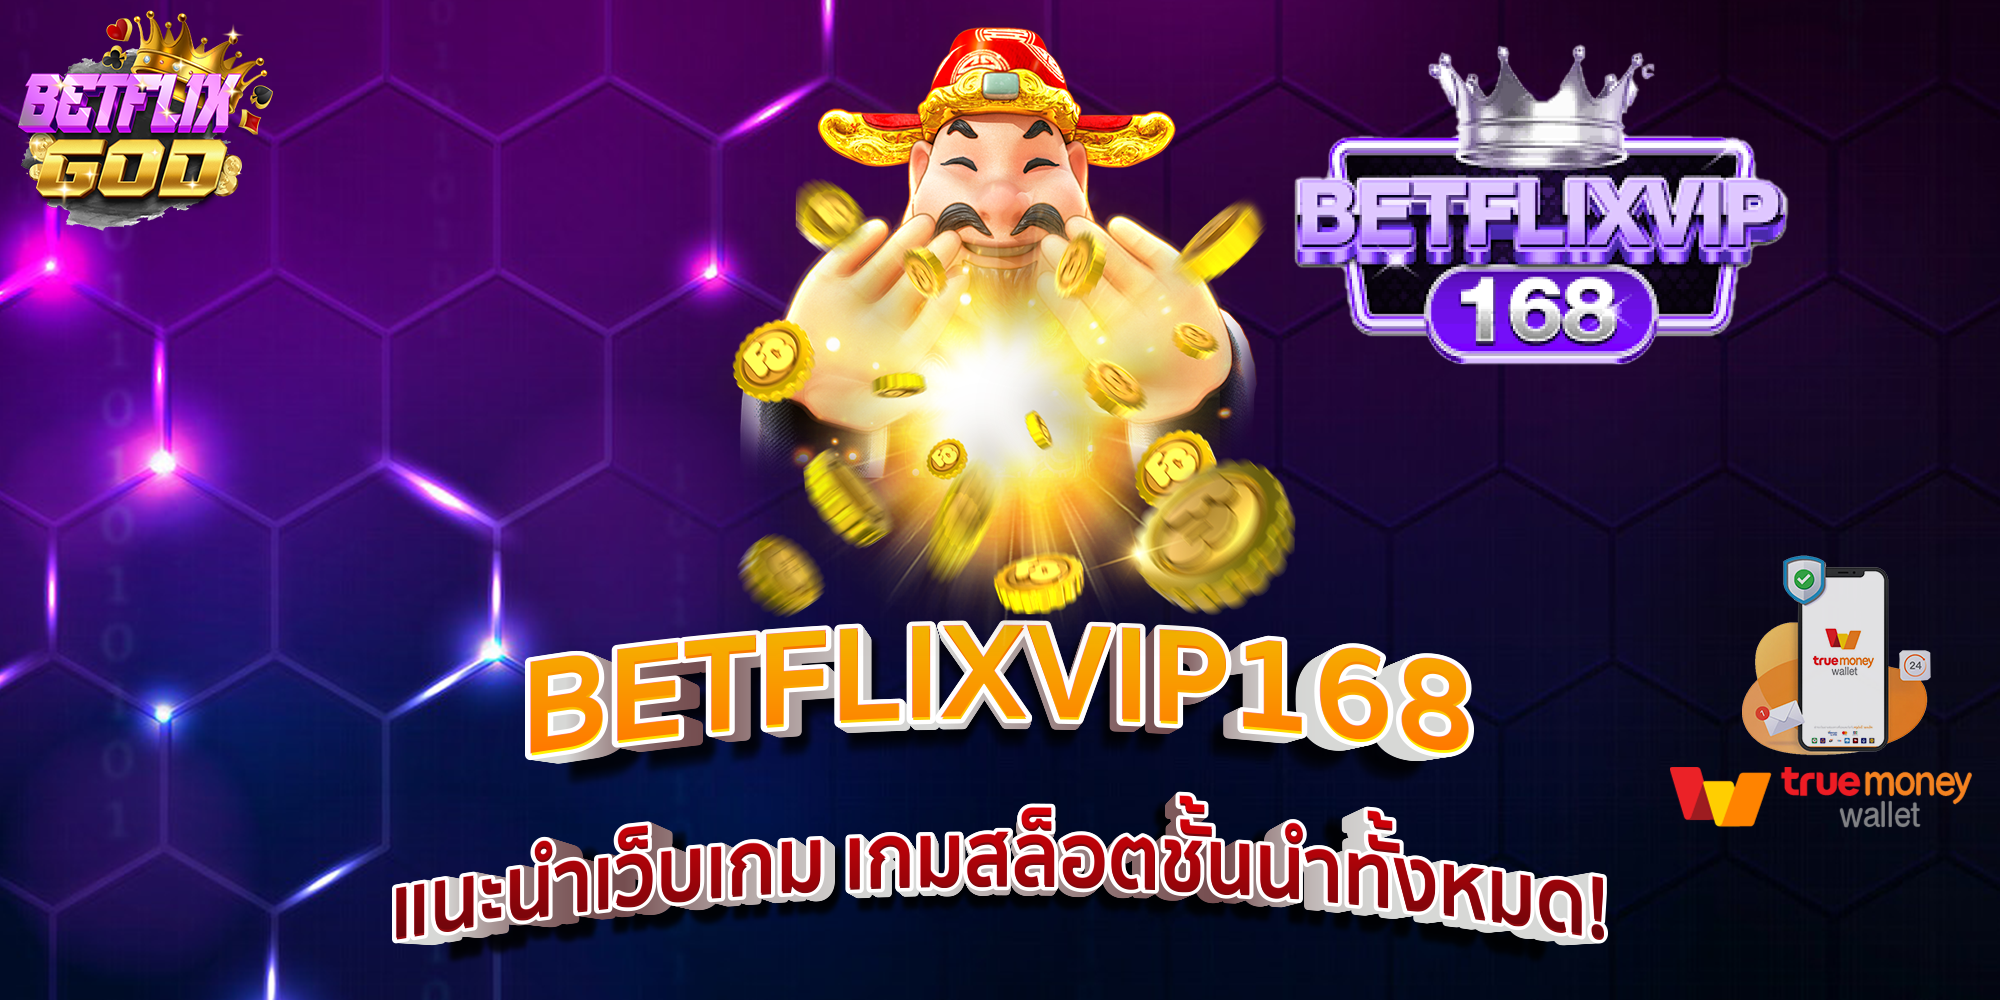 BETFLIXVIP168 แนะนำเว็บเกม เกมสล็อตชั้นนำทั้งหมด!